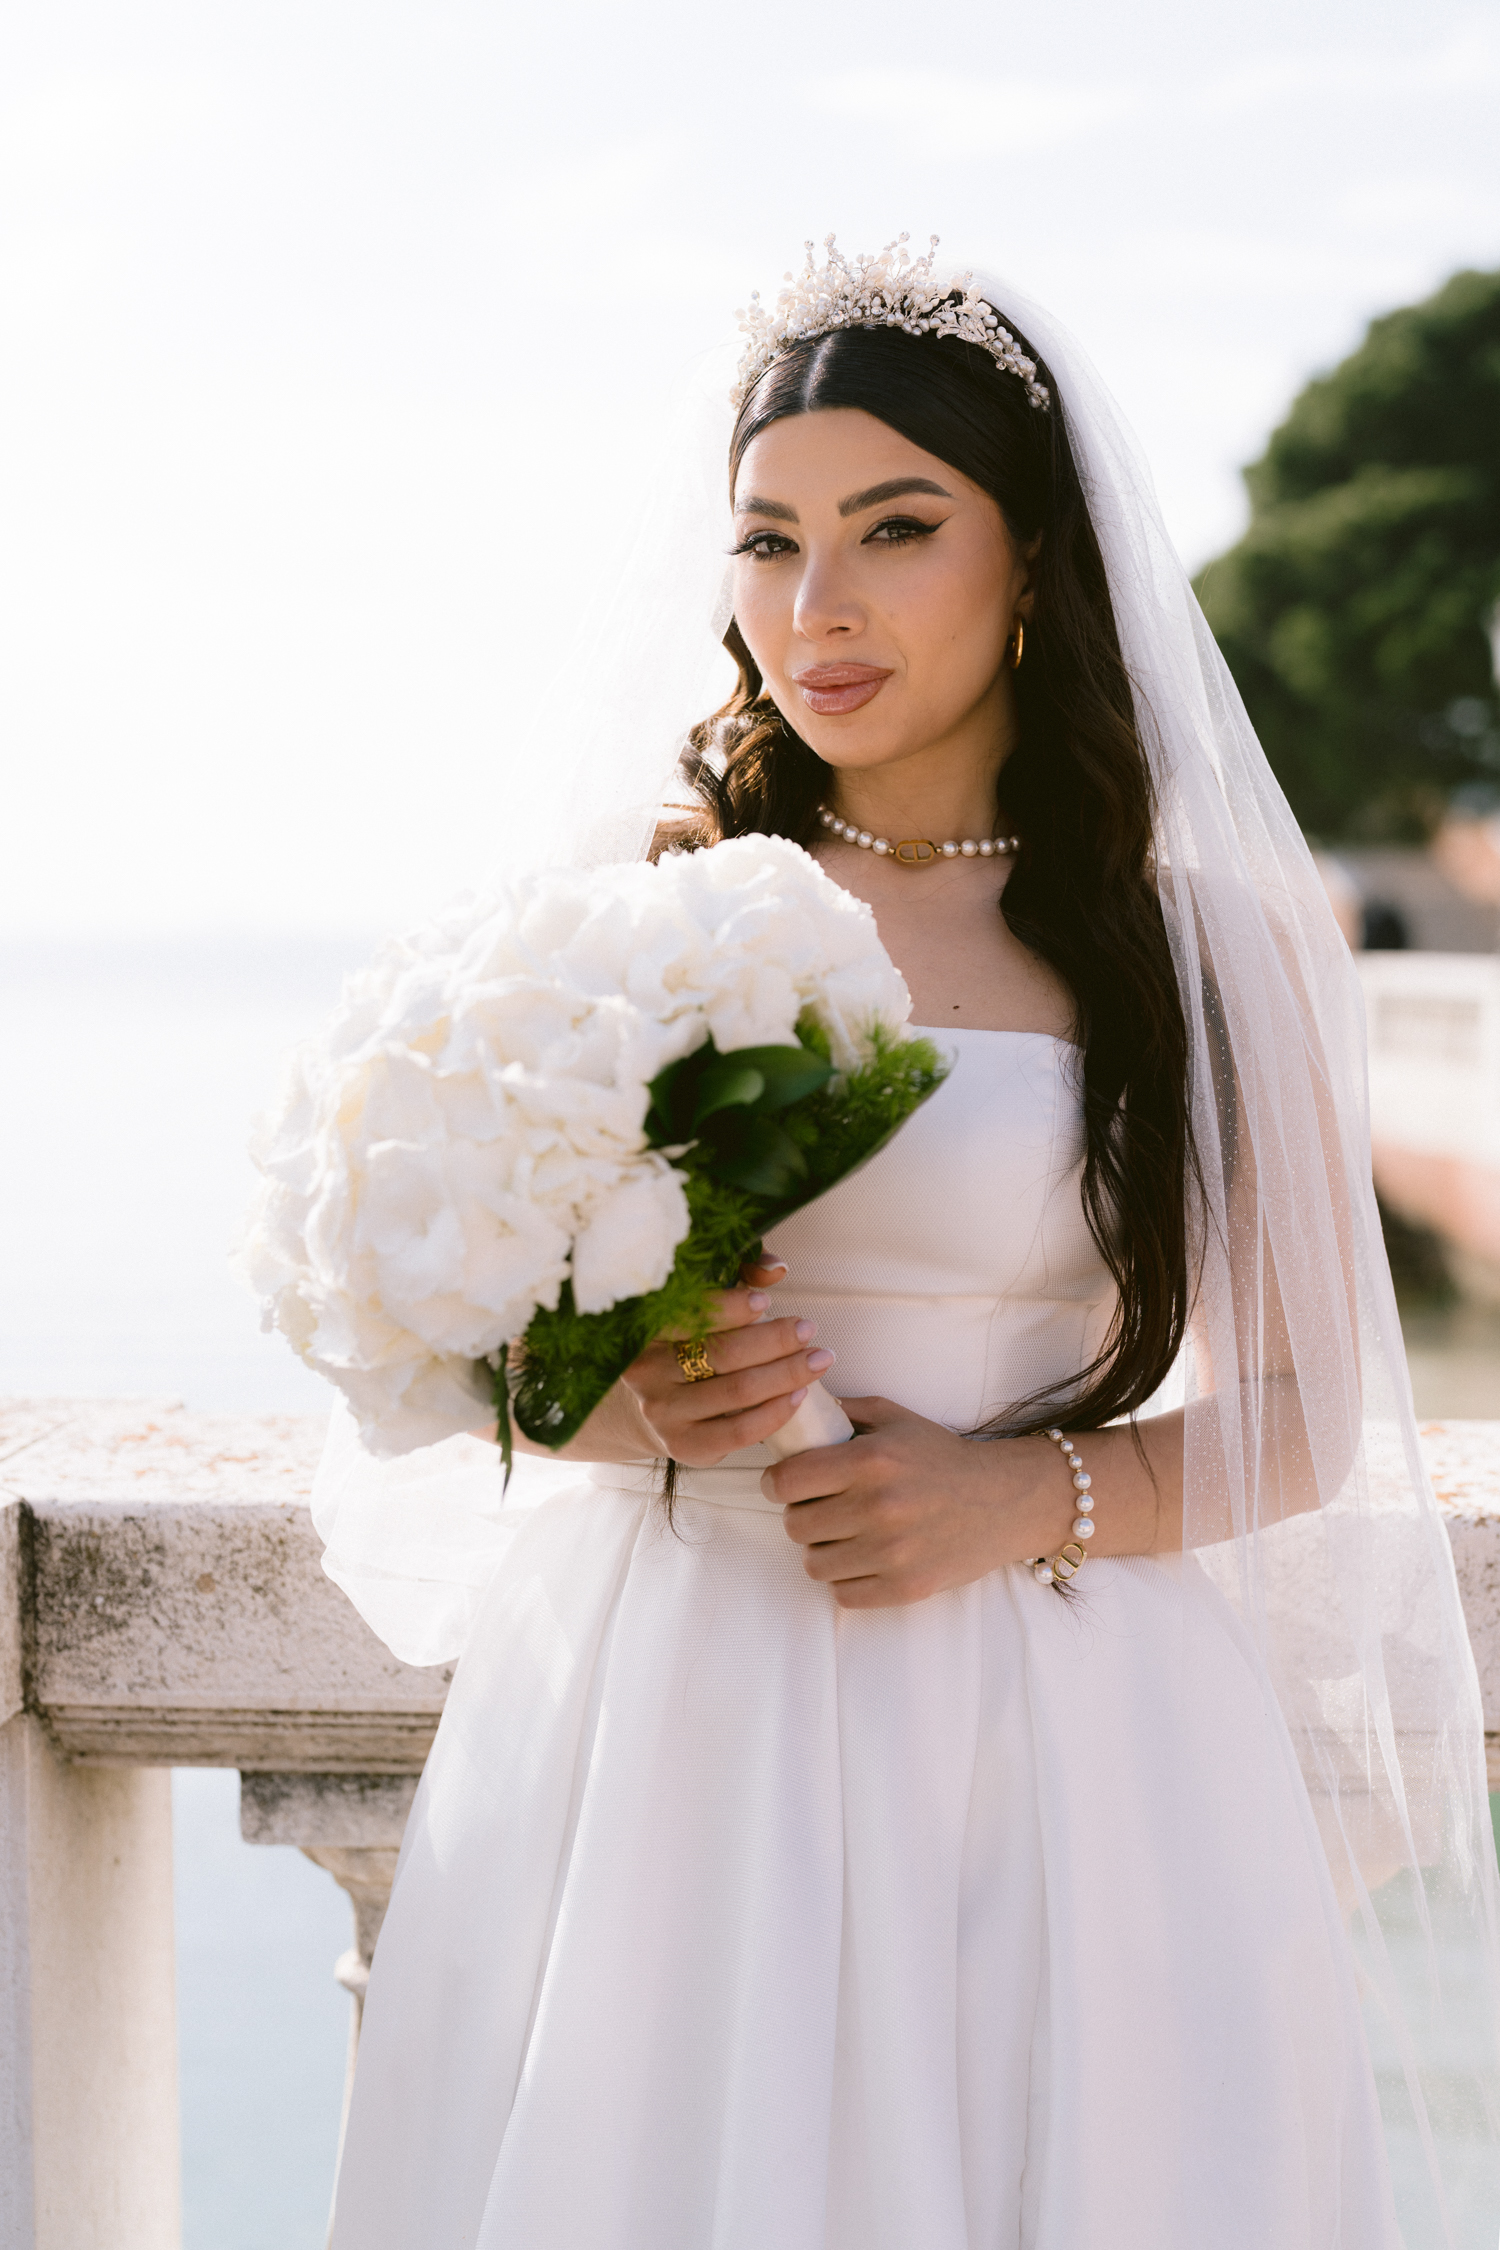 Top destination wedding photographer for an elopement photoshoot in Venice.